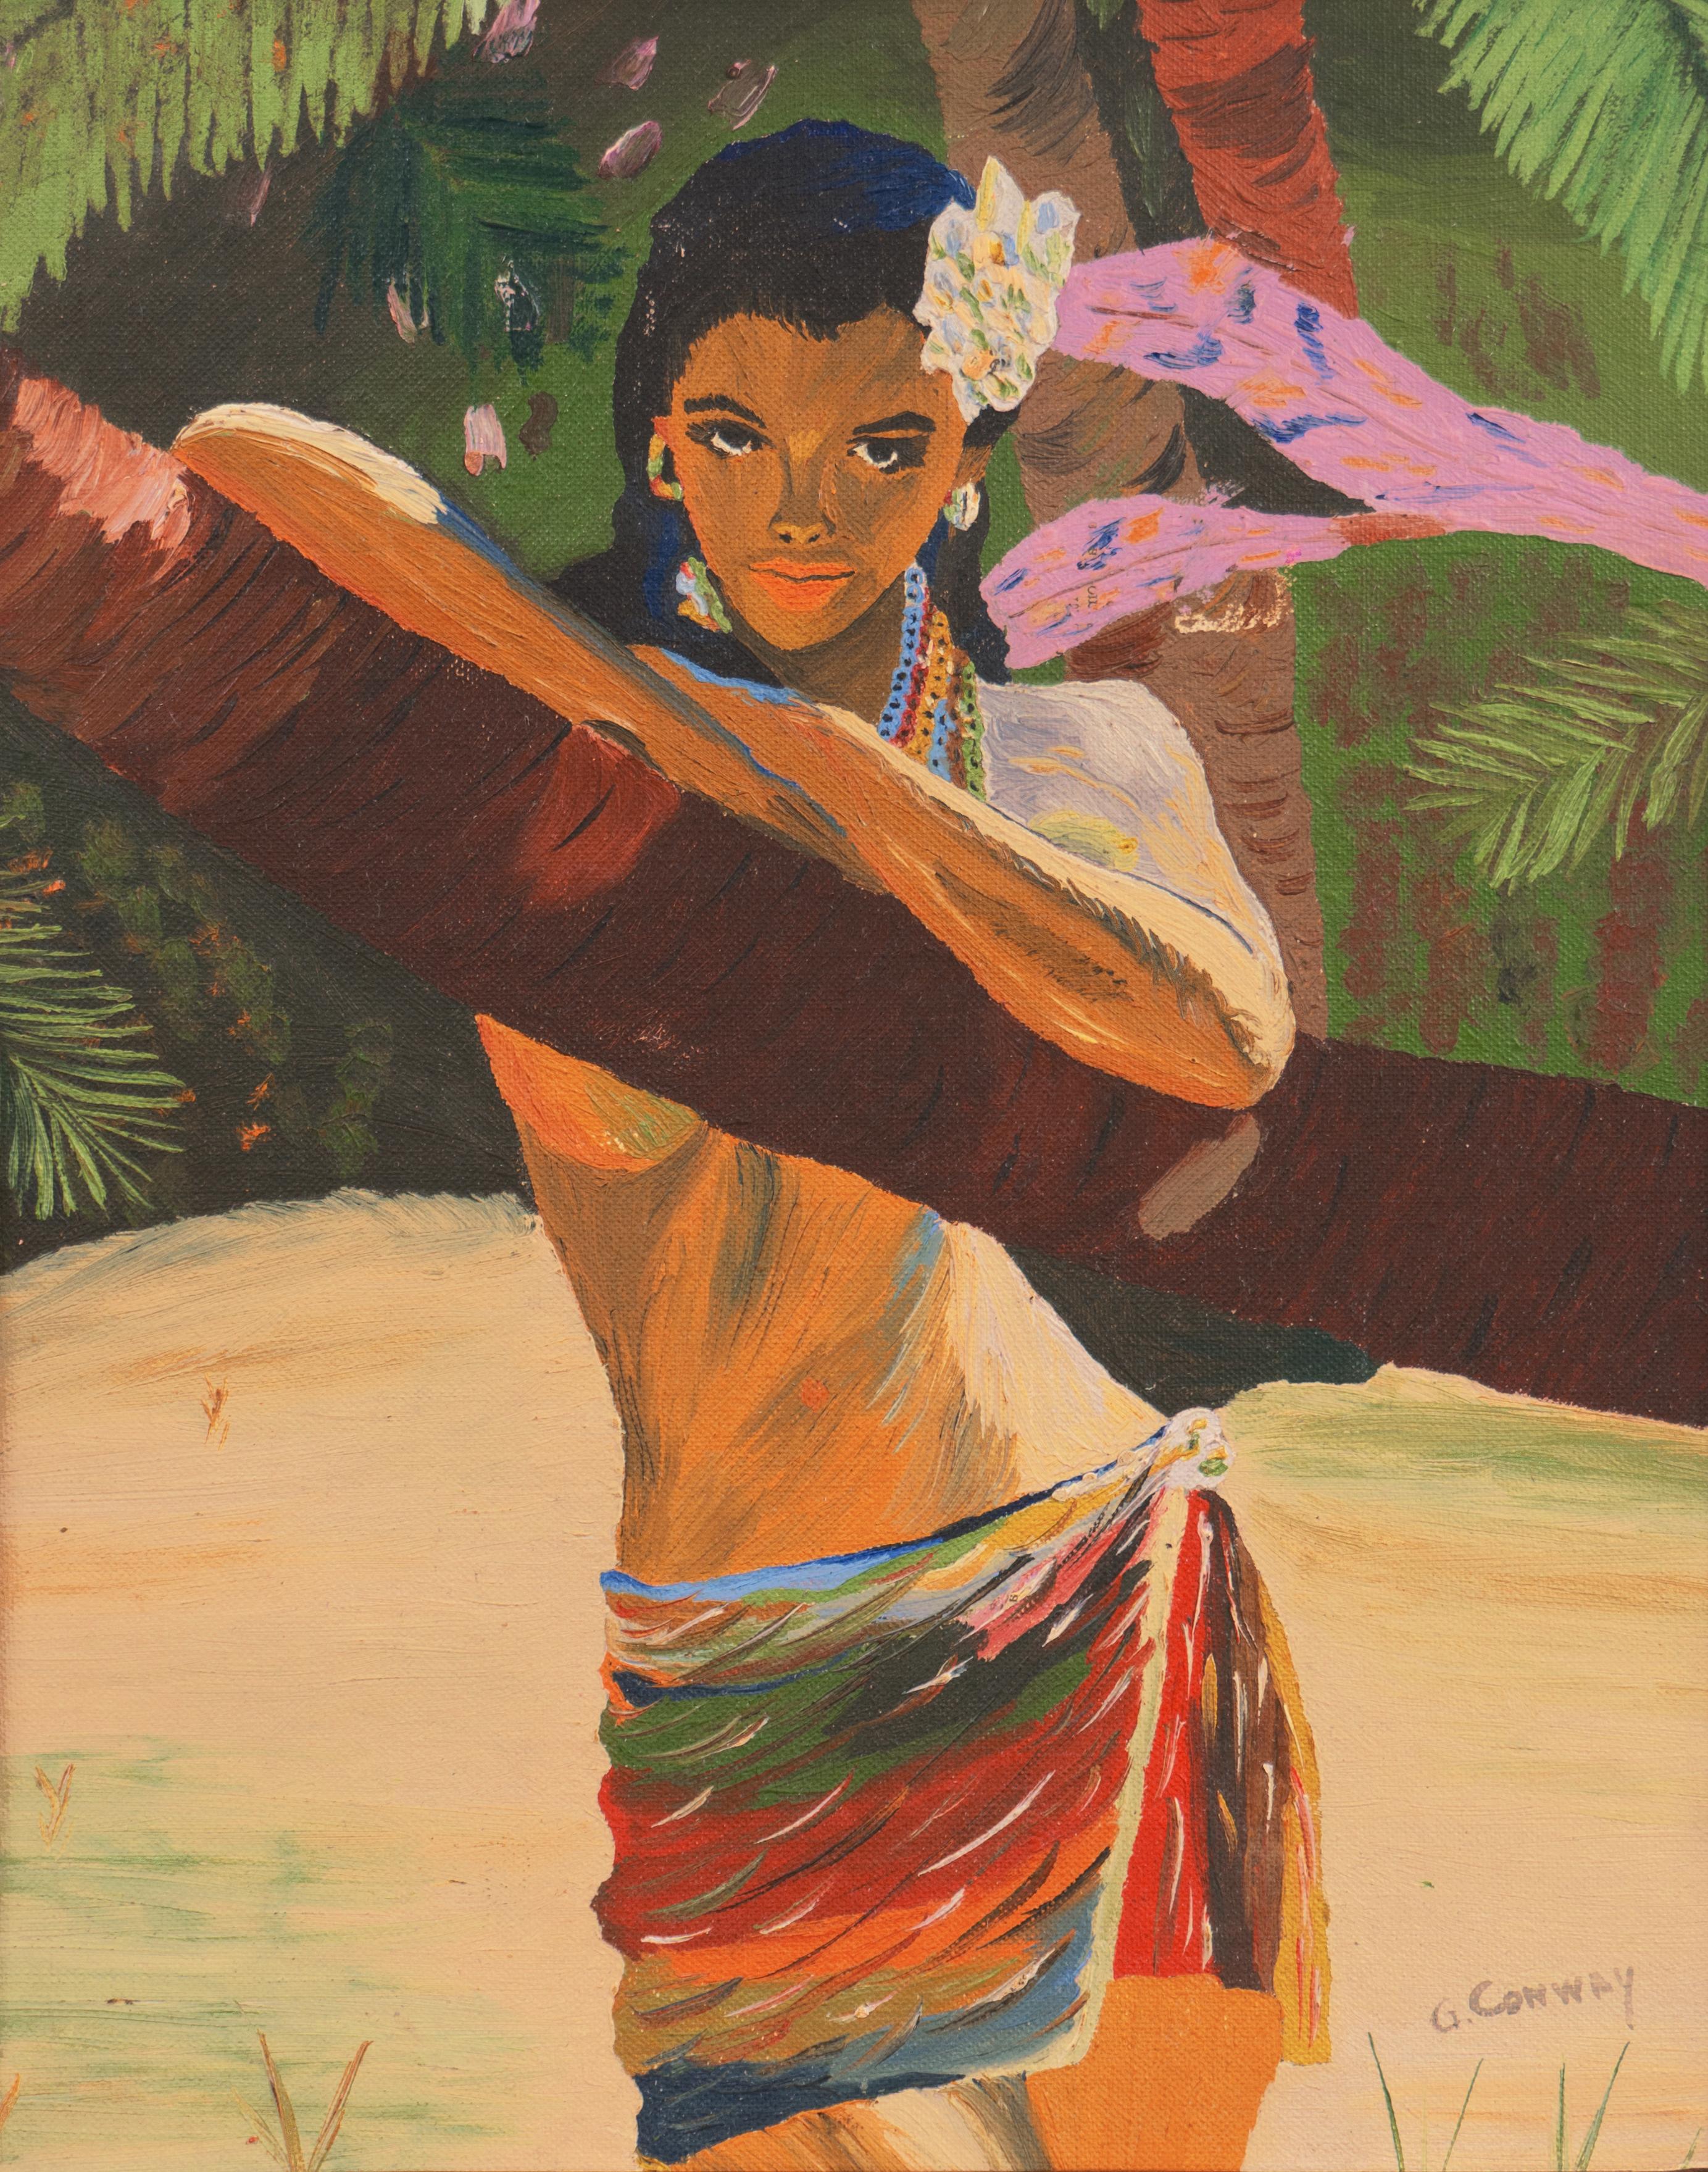 Gregory Conway Figurative Painting - 'Tropical Beach Beauty', Long Beach Art Association, Fiji, Pacific, South Seas